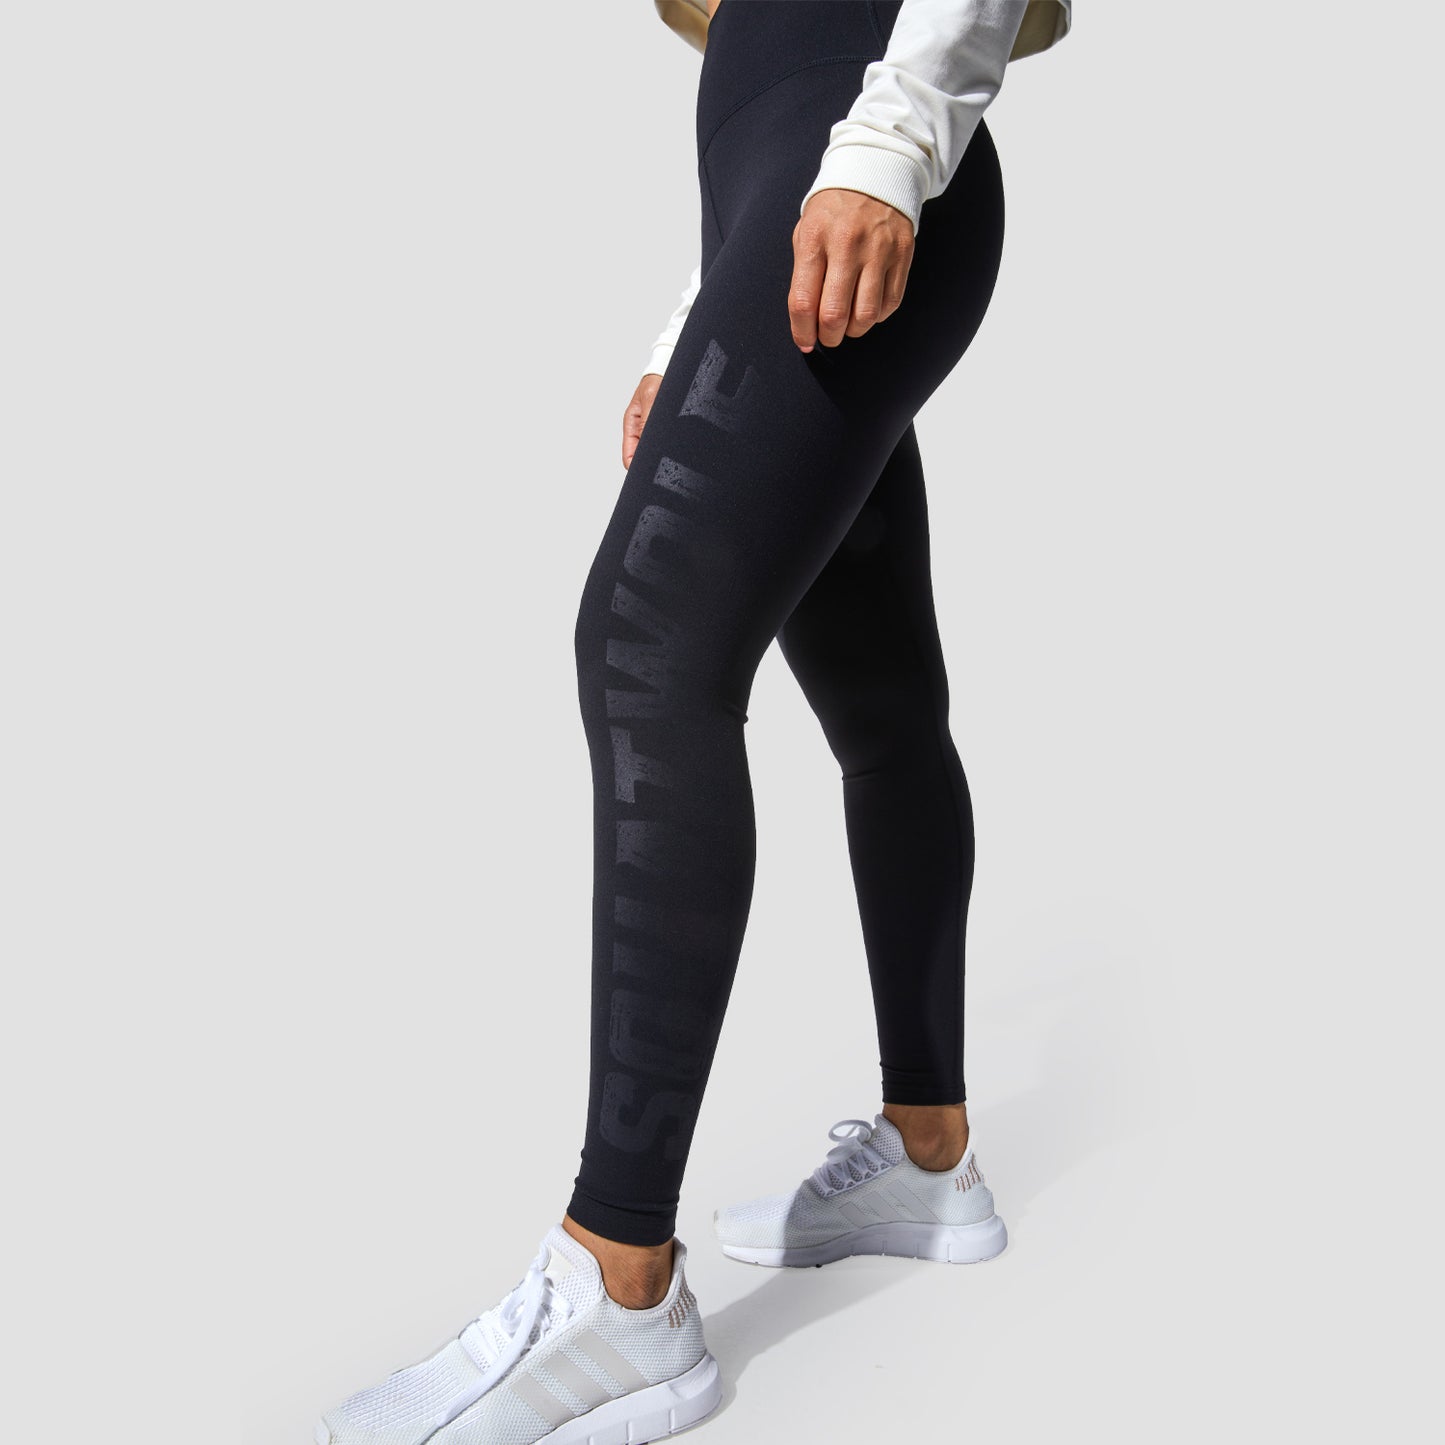 squatwolf-workout-clothes-graphic-wordmark-leggins-black-gym-leggings-for-women